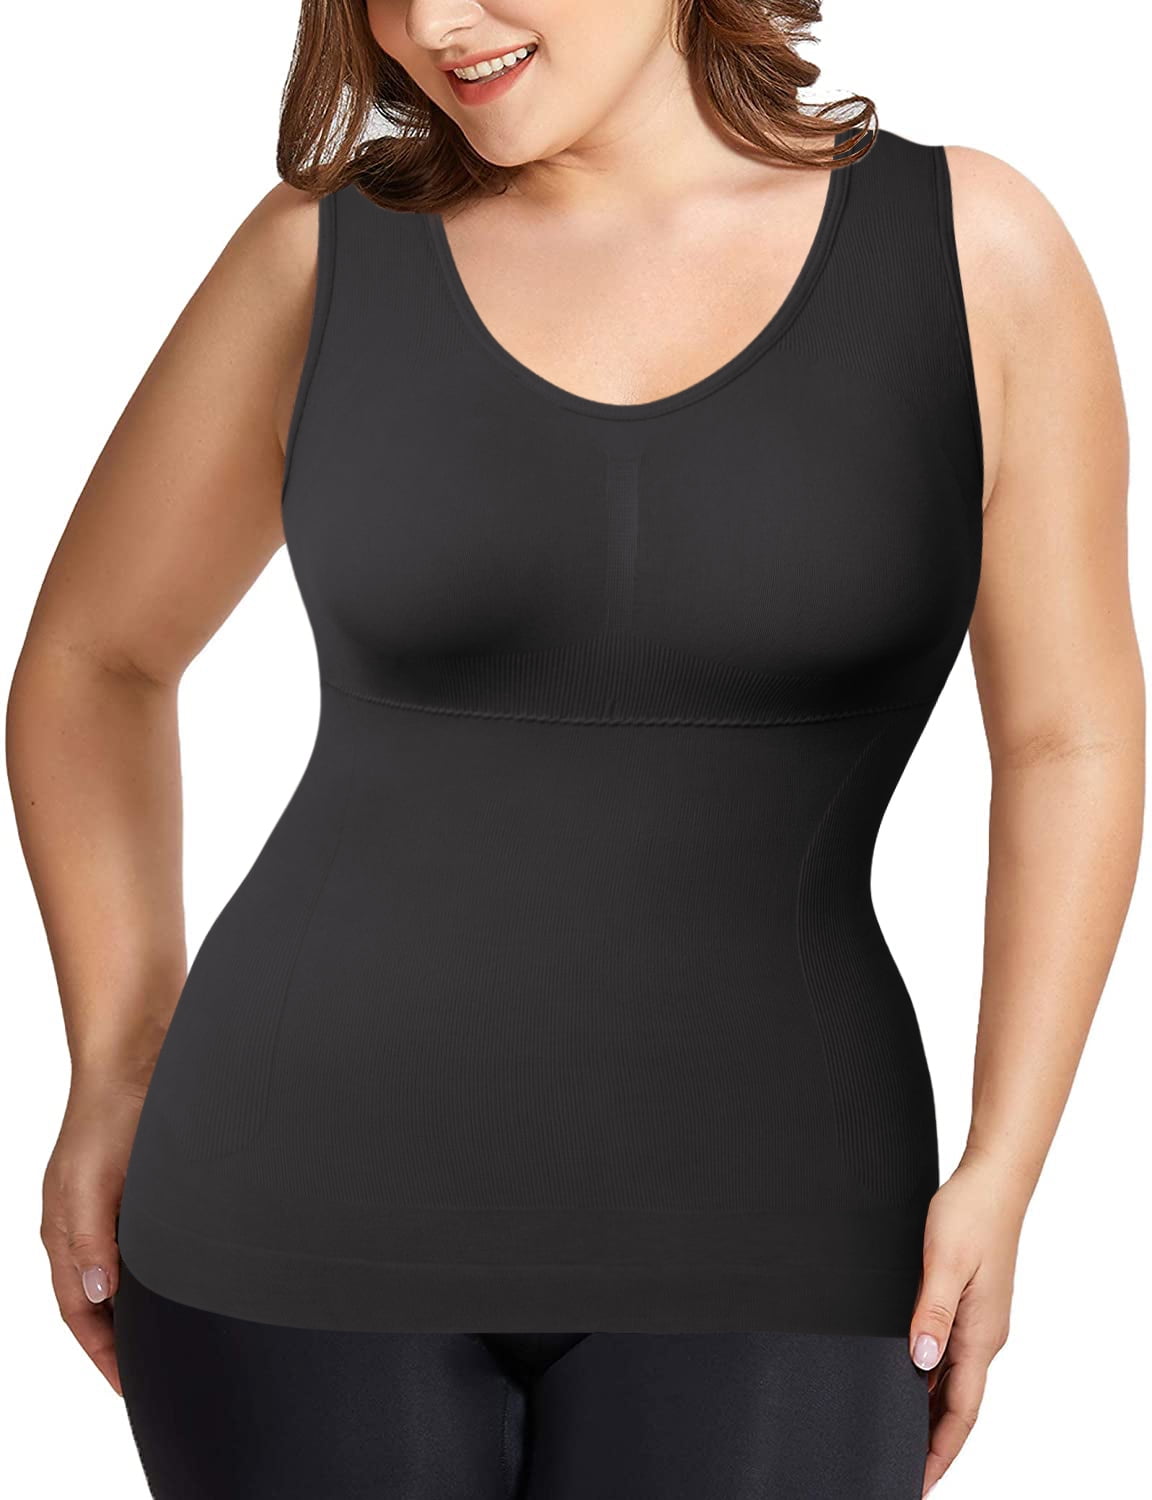 COMFREE Women's Cami Plus Size with Built in Bra Camisole Tummy Control Tank Top Undershirt Shapewear - Walmart.com